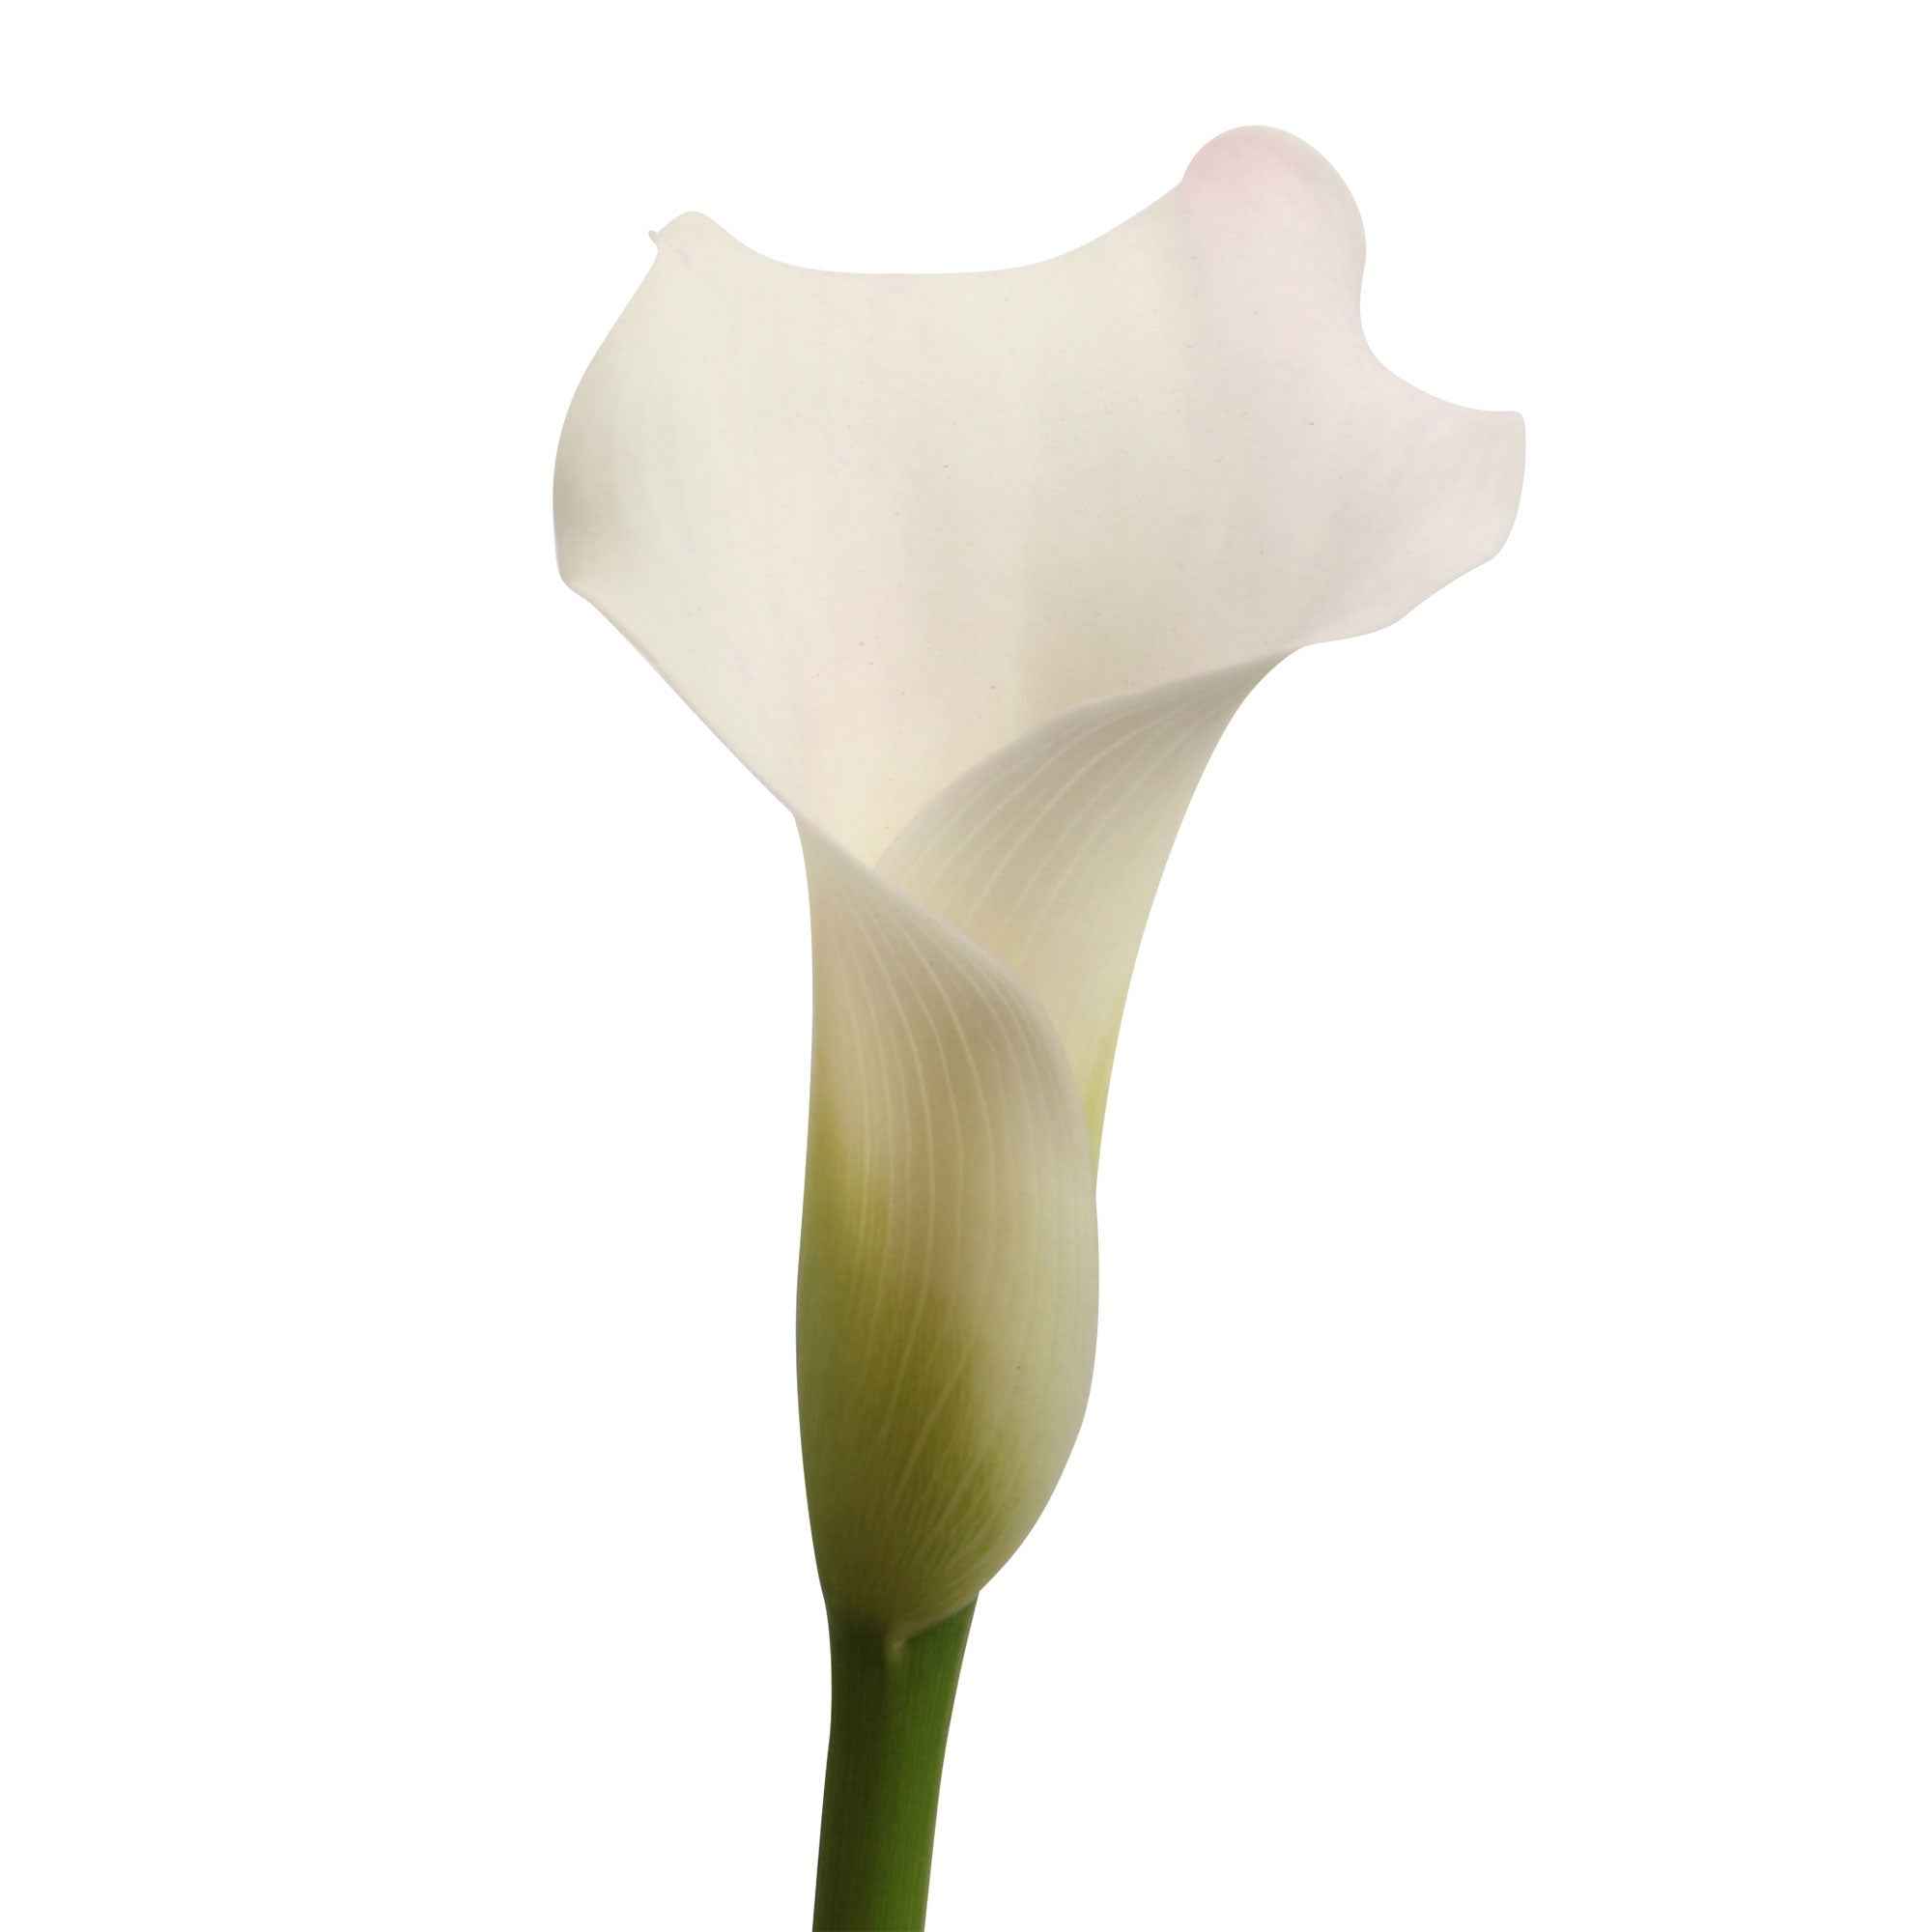 Arum Zantedeschia 'Chrystal Blush' blanc acheter | Bakker.com